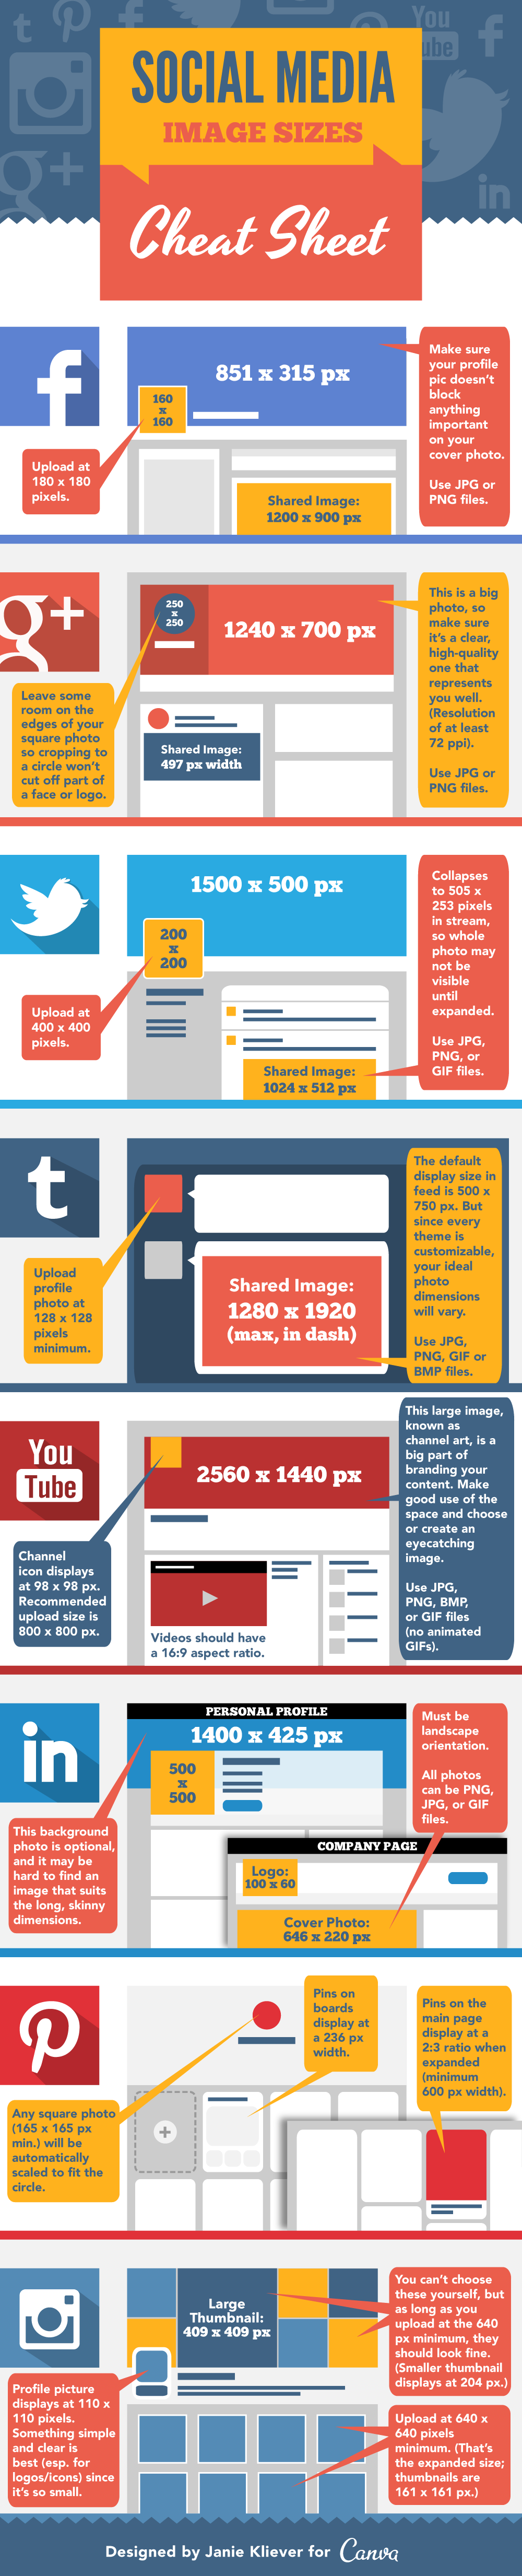 Canva_social-media-image-sizes-infographic